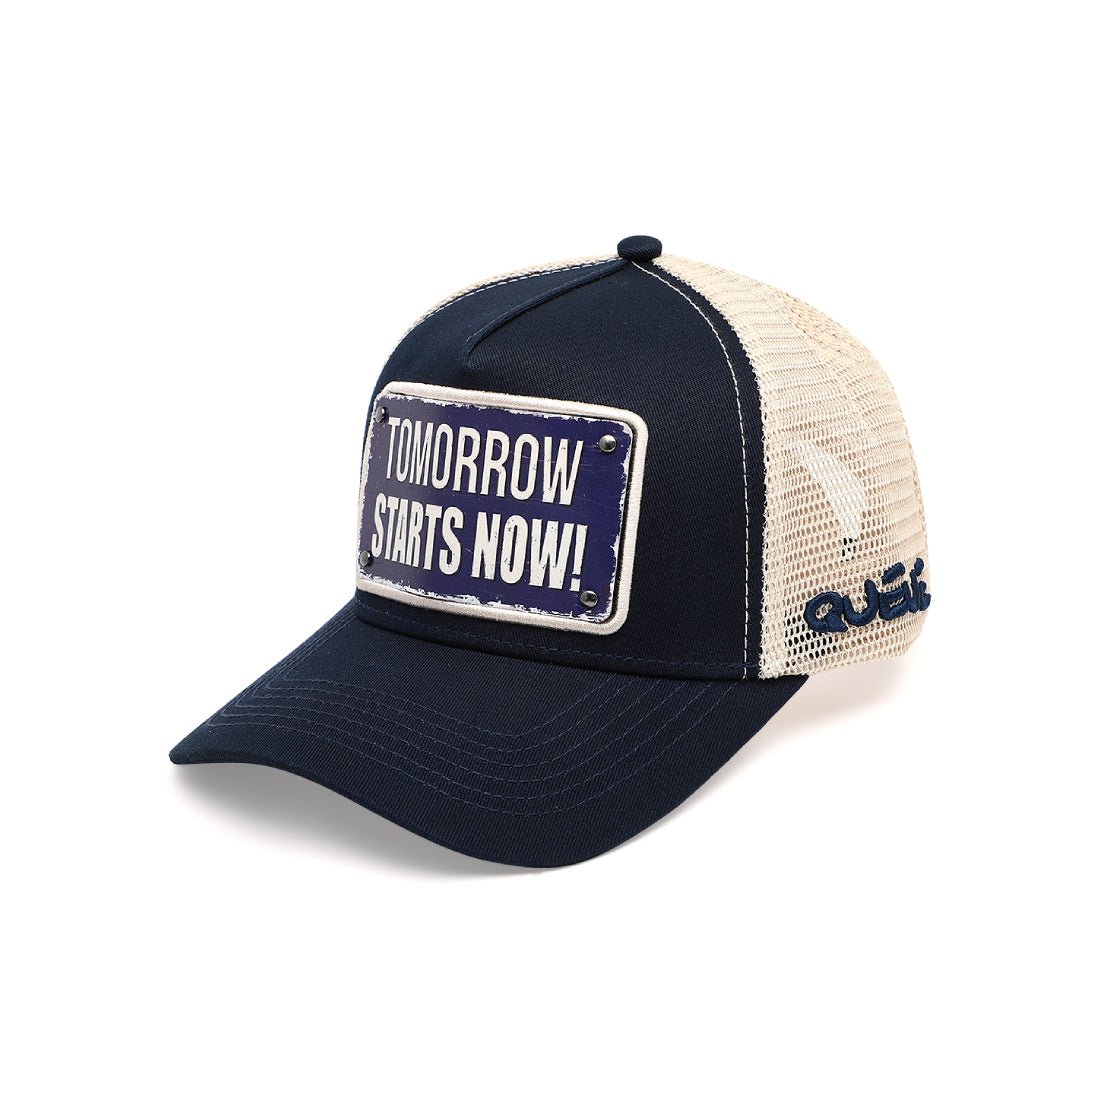 Queue Caps Tomorrow Starts Now Cap - Navy & Light Blue - قبعة - Store 974 | ستور ٩٧٤